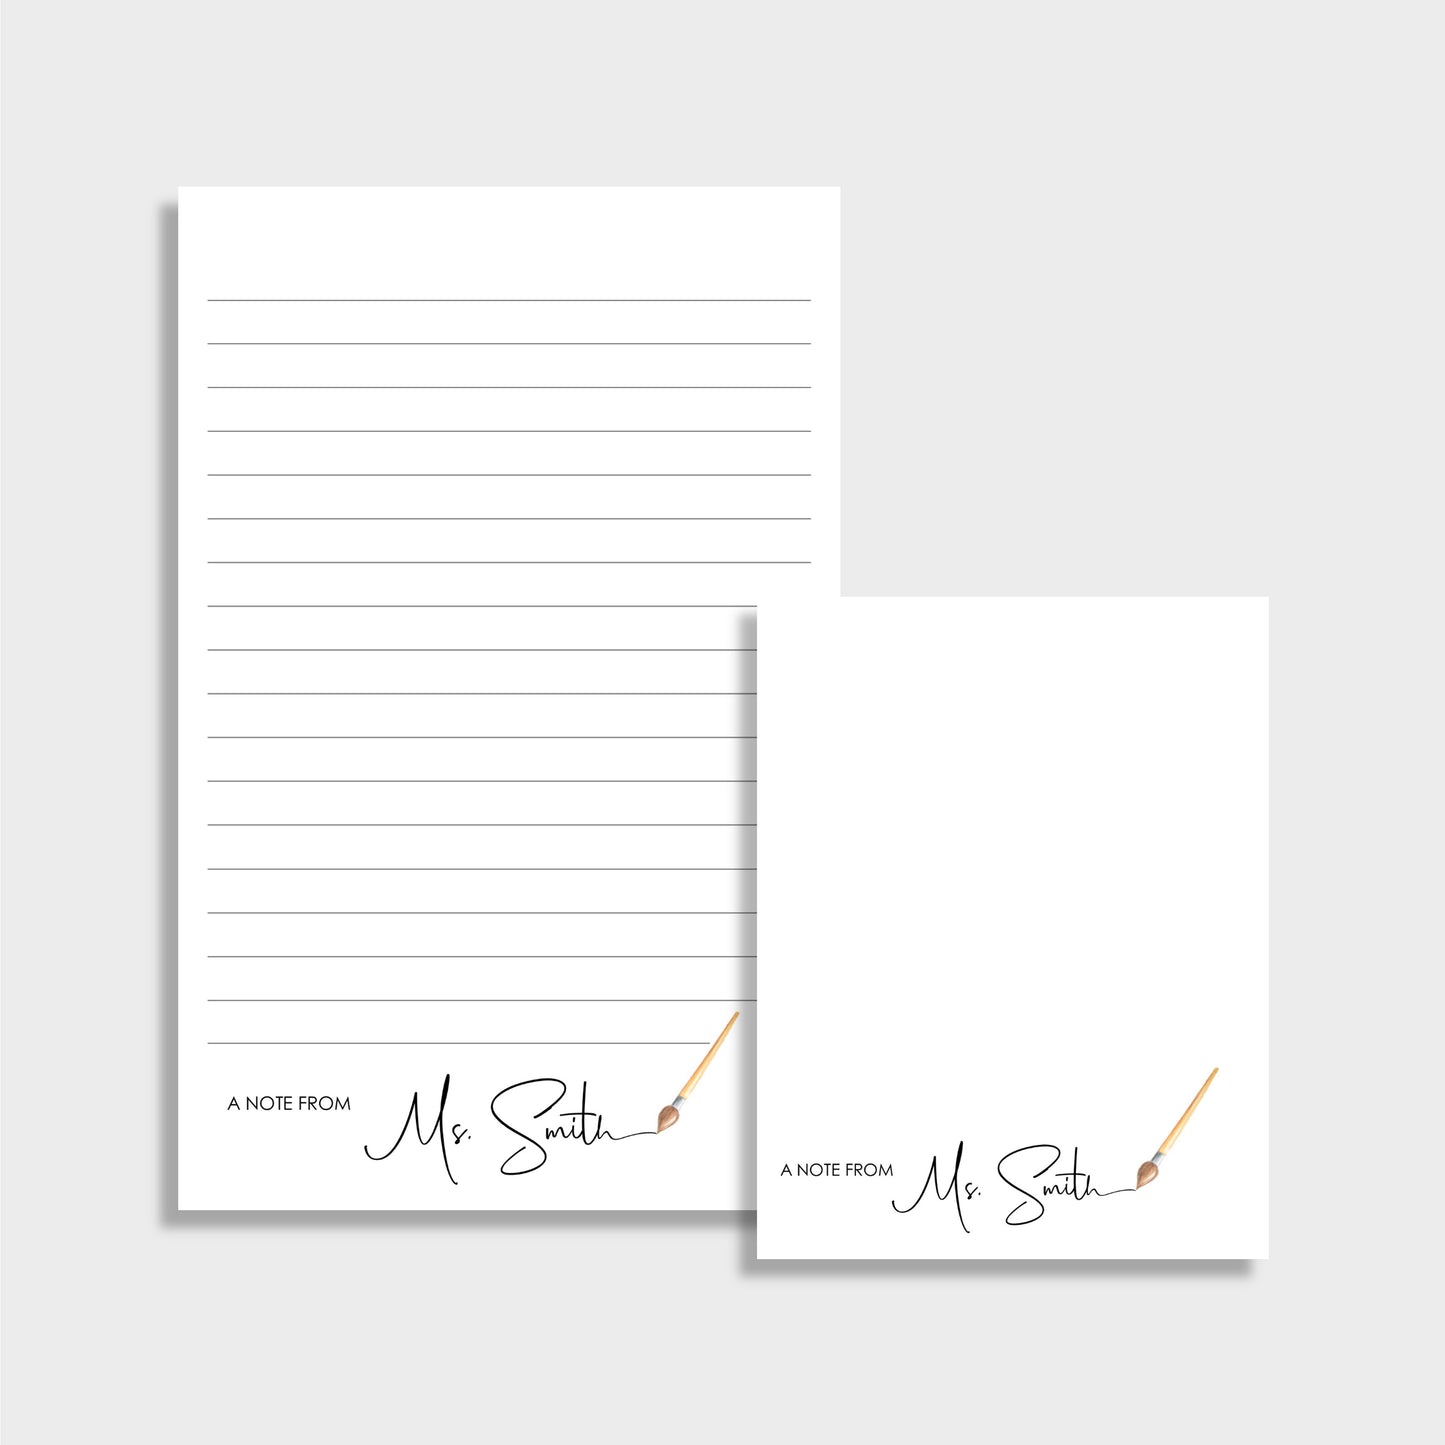 Brush Writing Personalized Art Teacher Stationery Set, Set of 2 Notepads & Set of Notecards